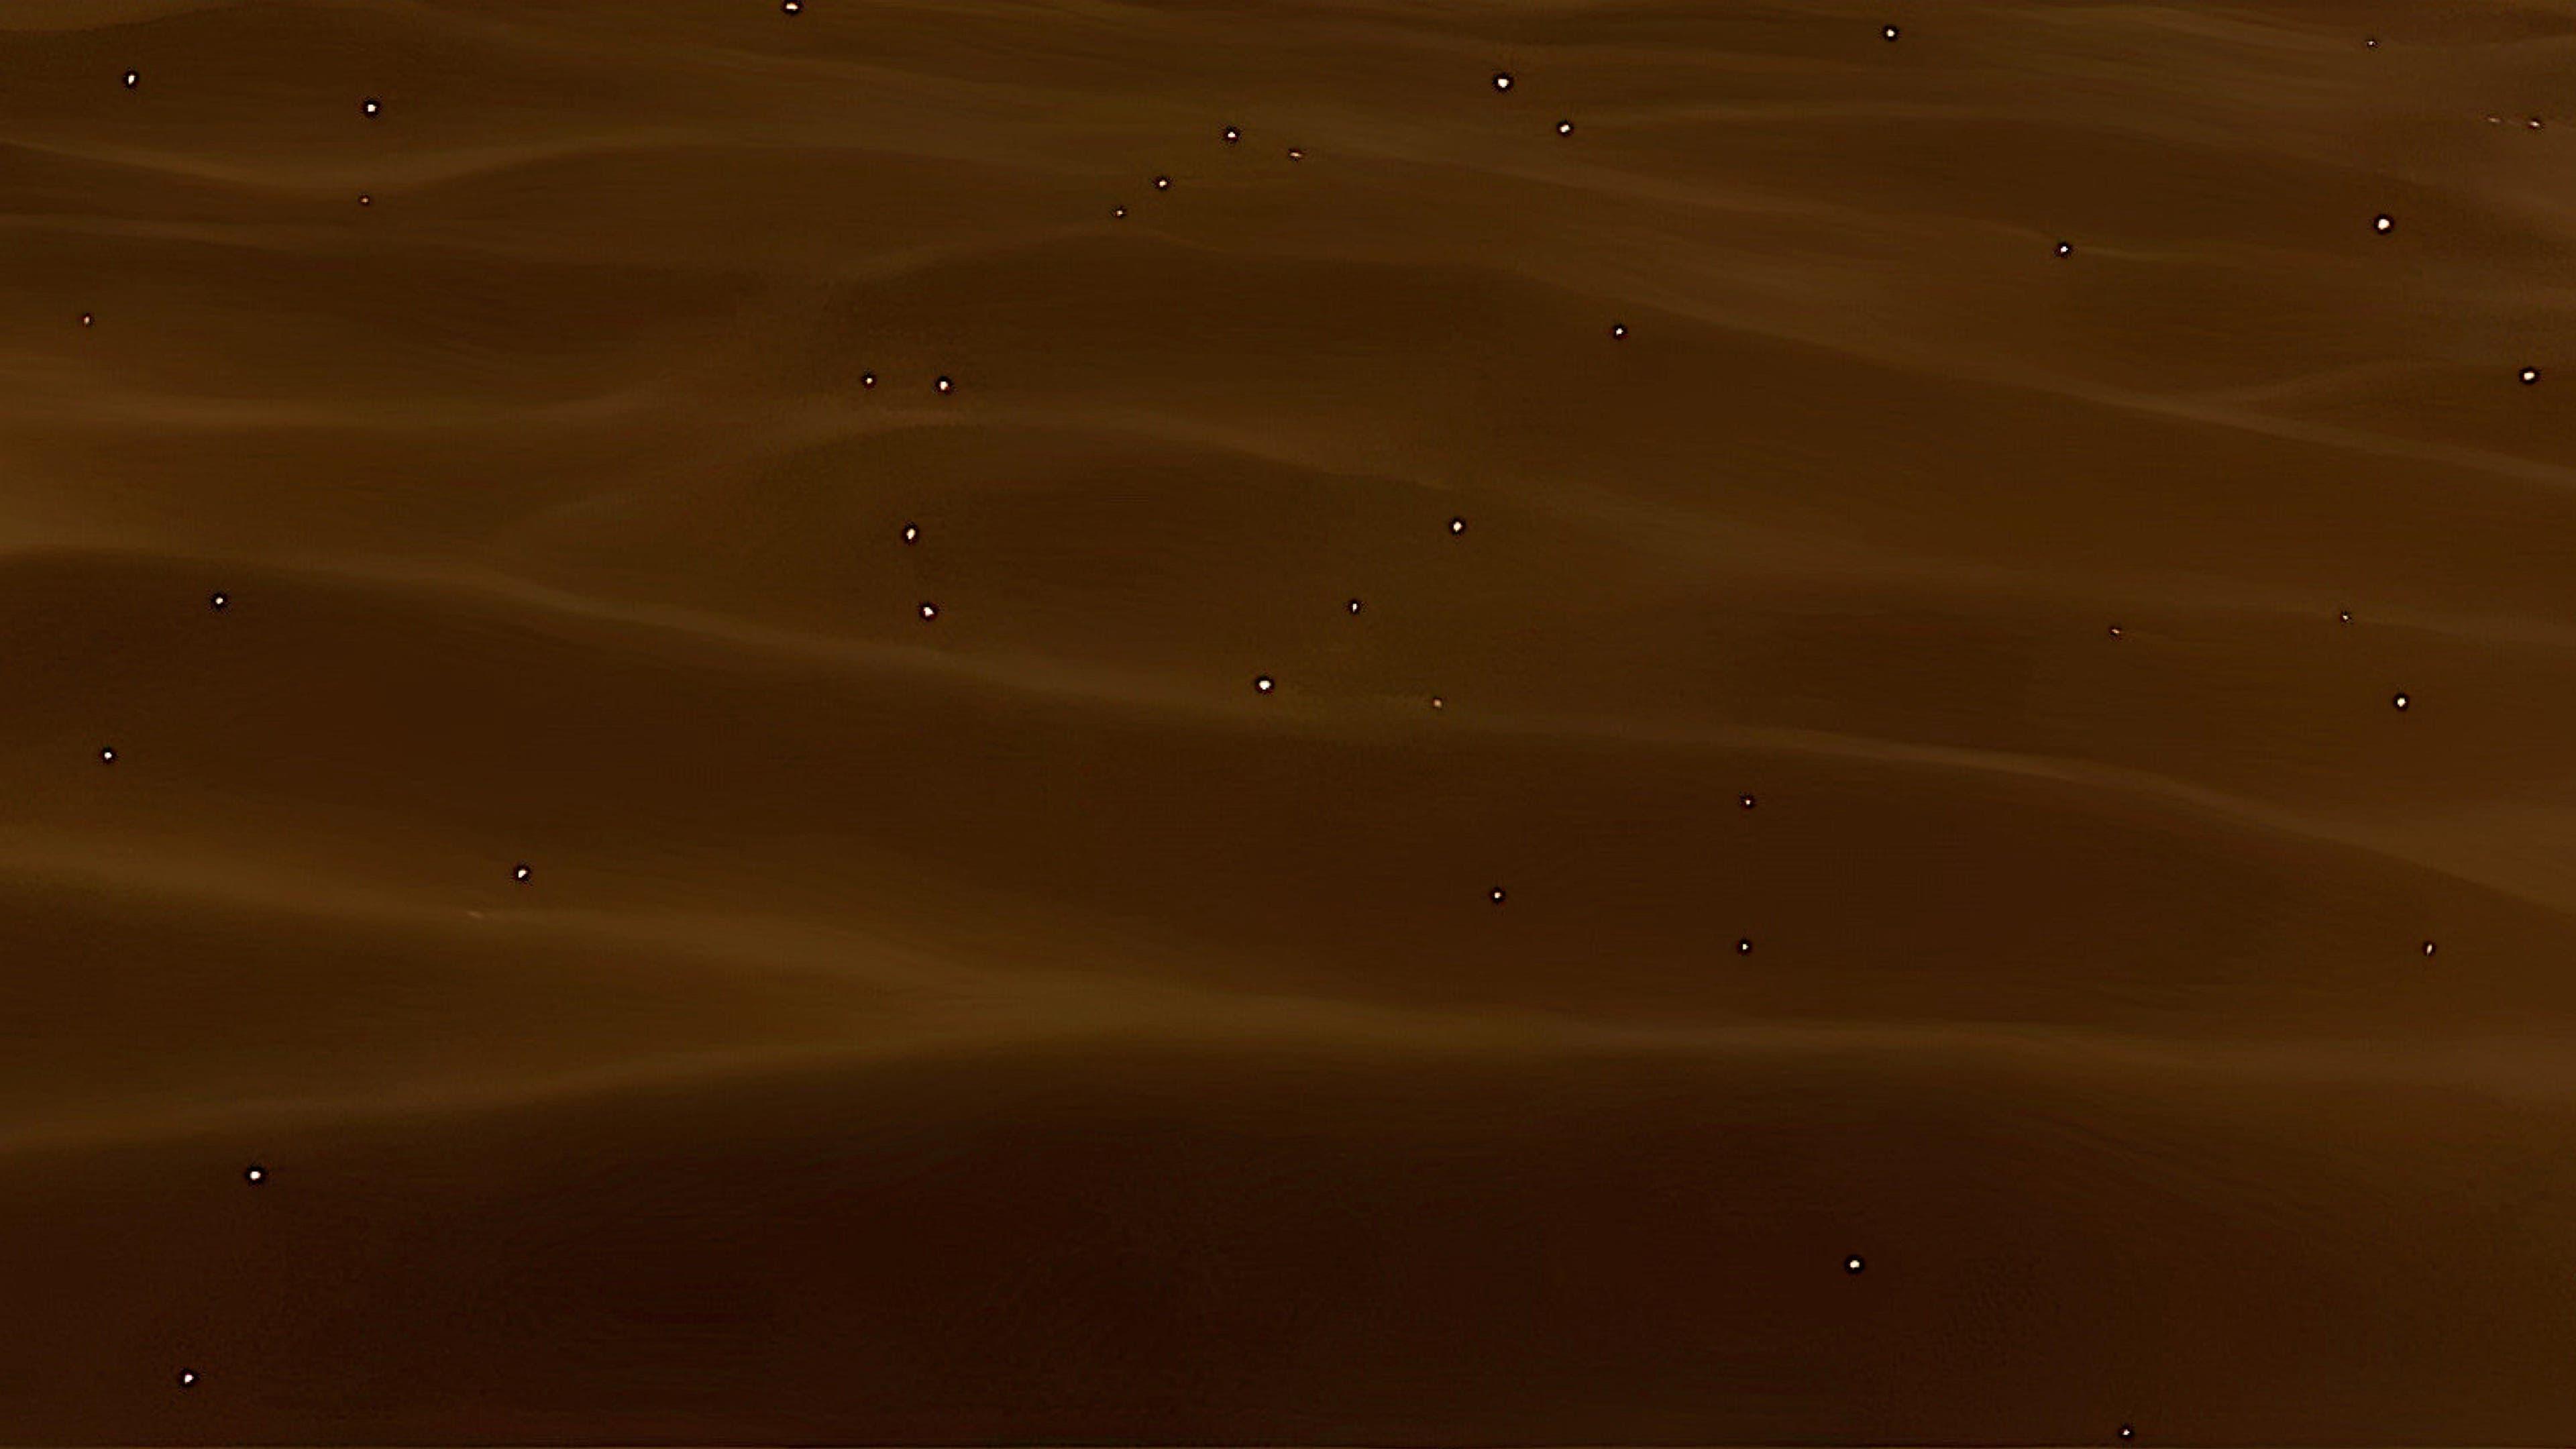 Impressions of Dune backdrop